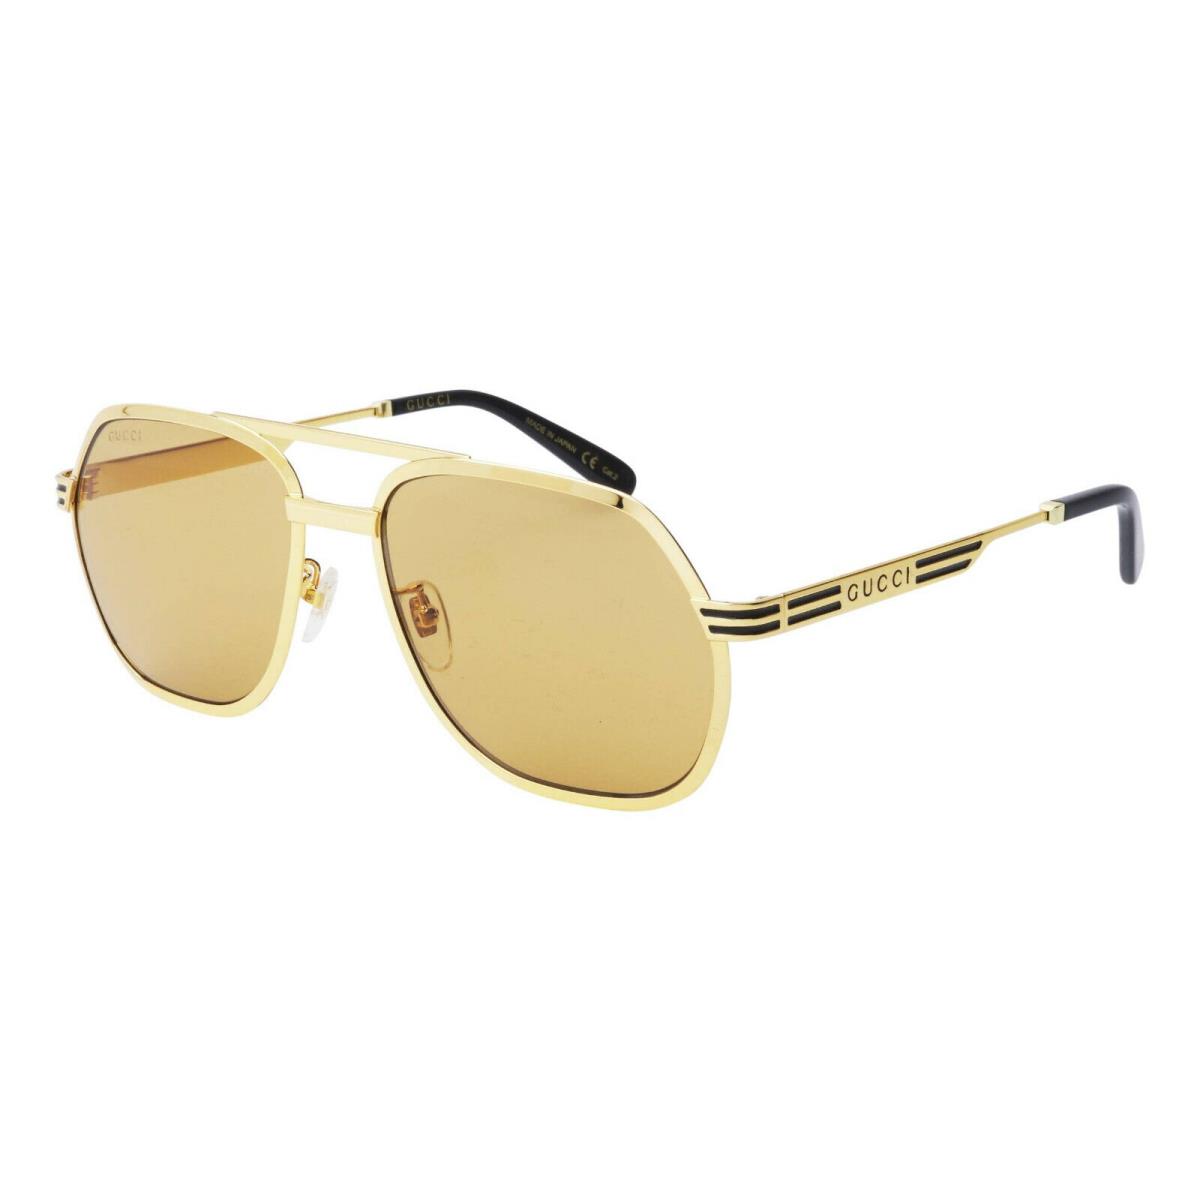 Gucci Sunglasses GG0981S 003 Gold Pilot Frames Gold Gradient Lens 60MM